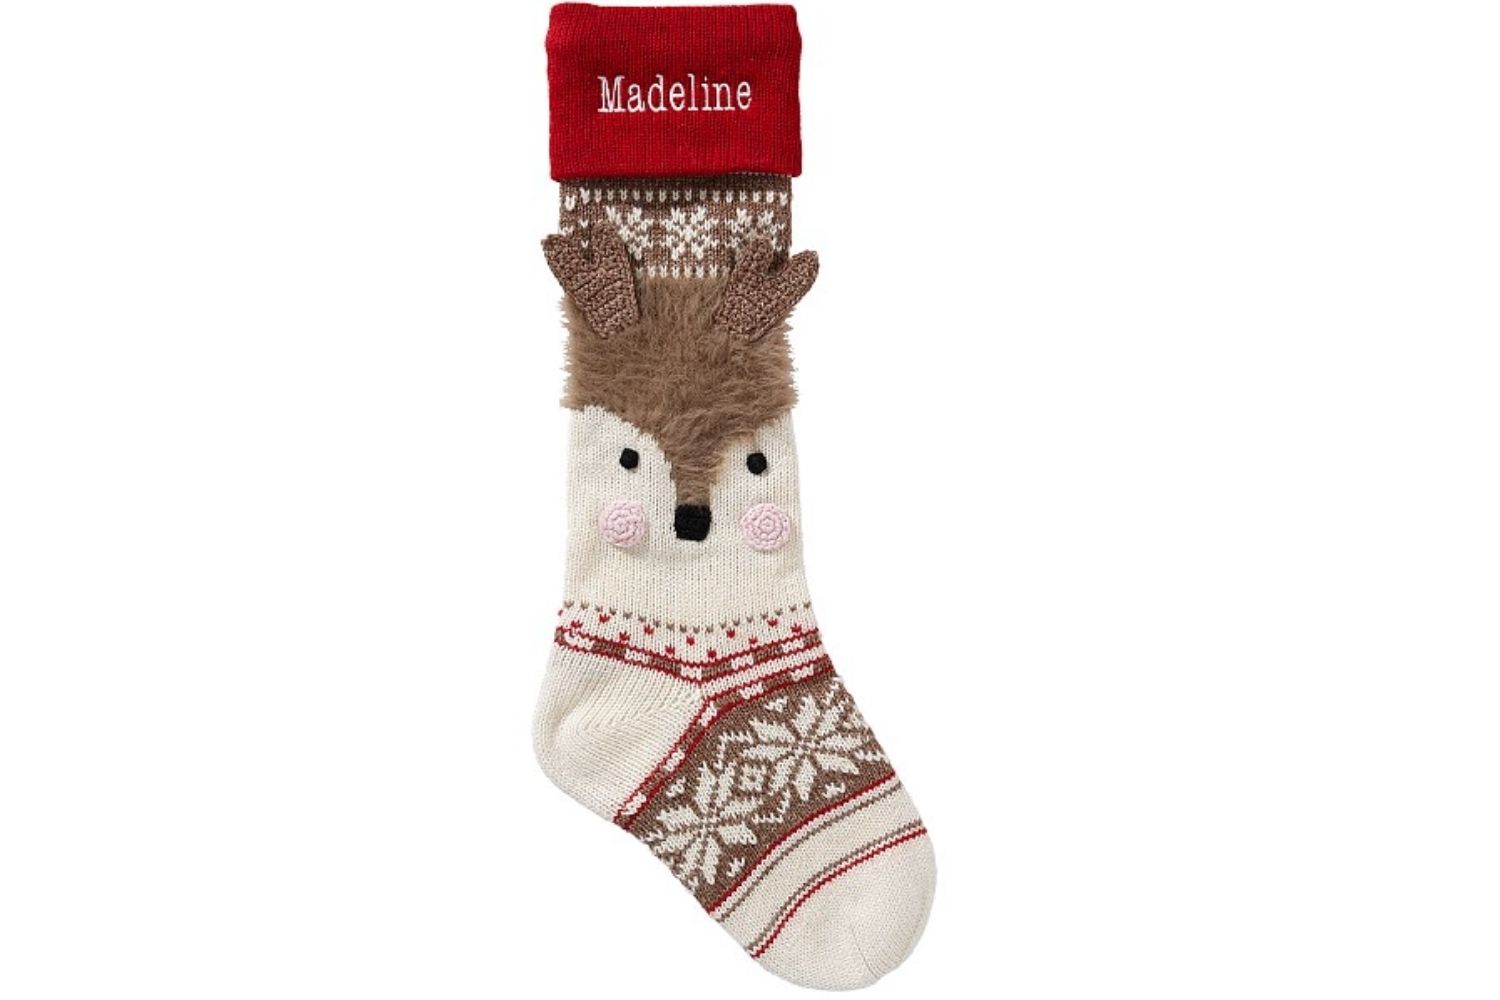 The Best Christmas Stockings Option: Pottery Barn Reindeer Face Classic Fair Isle Christmas Stocking